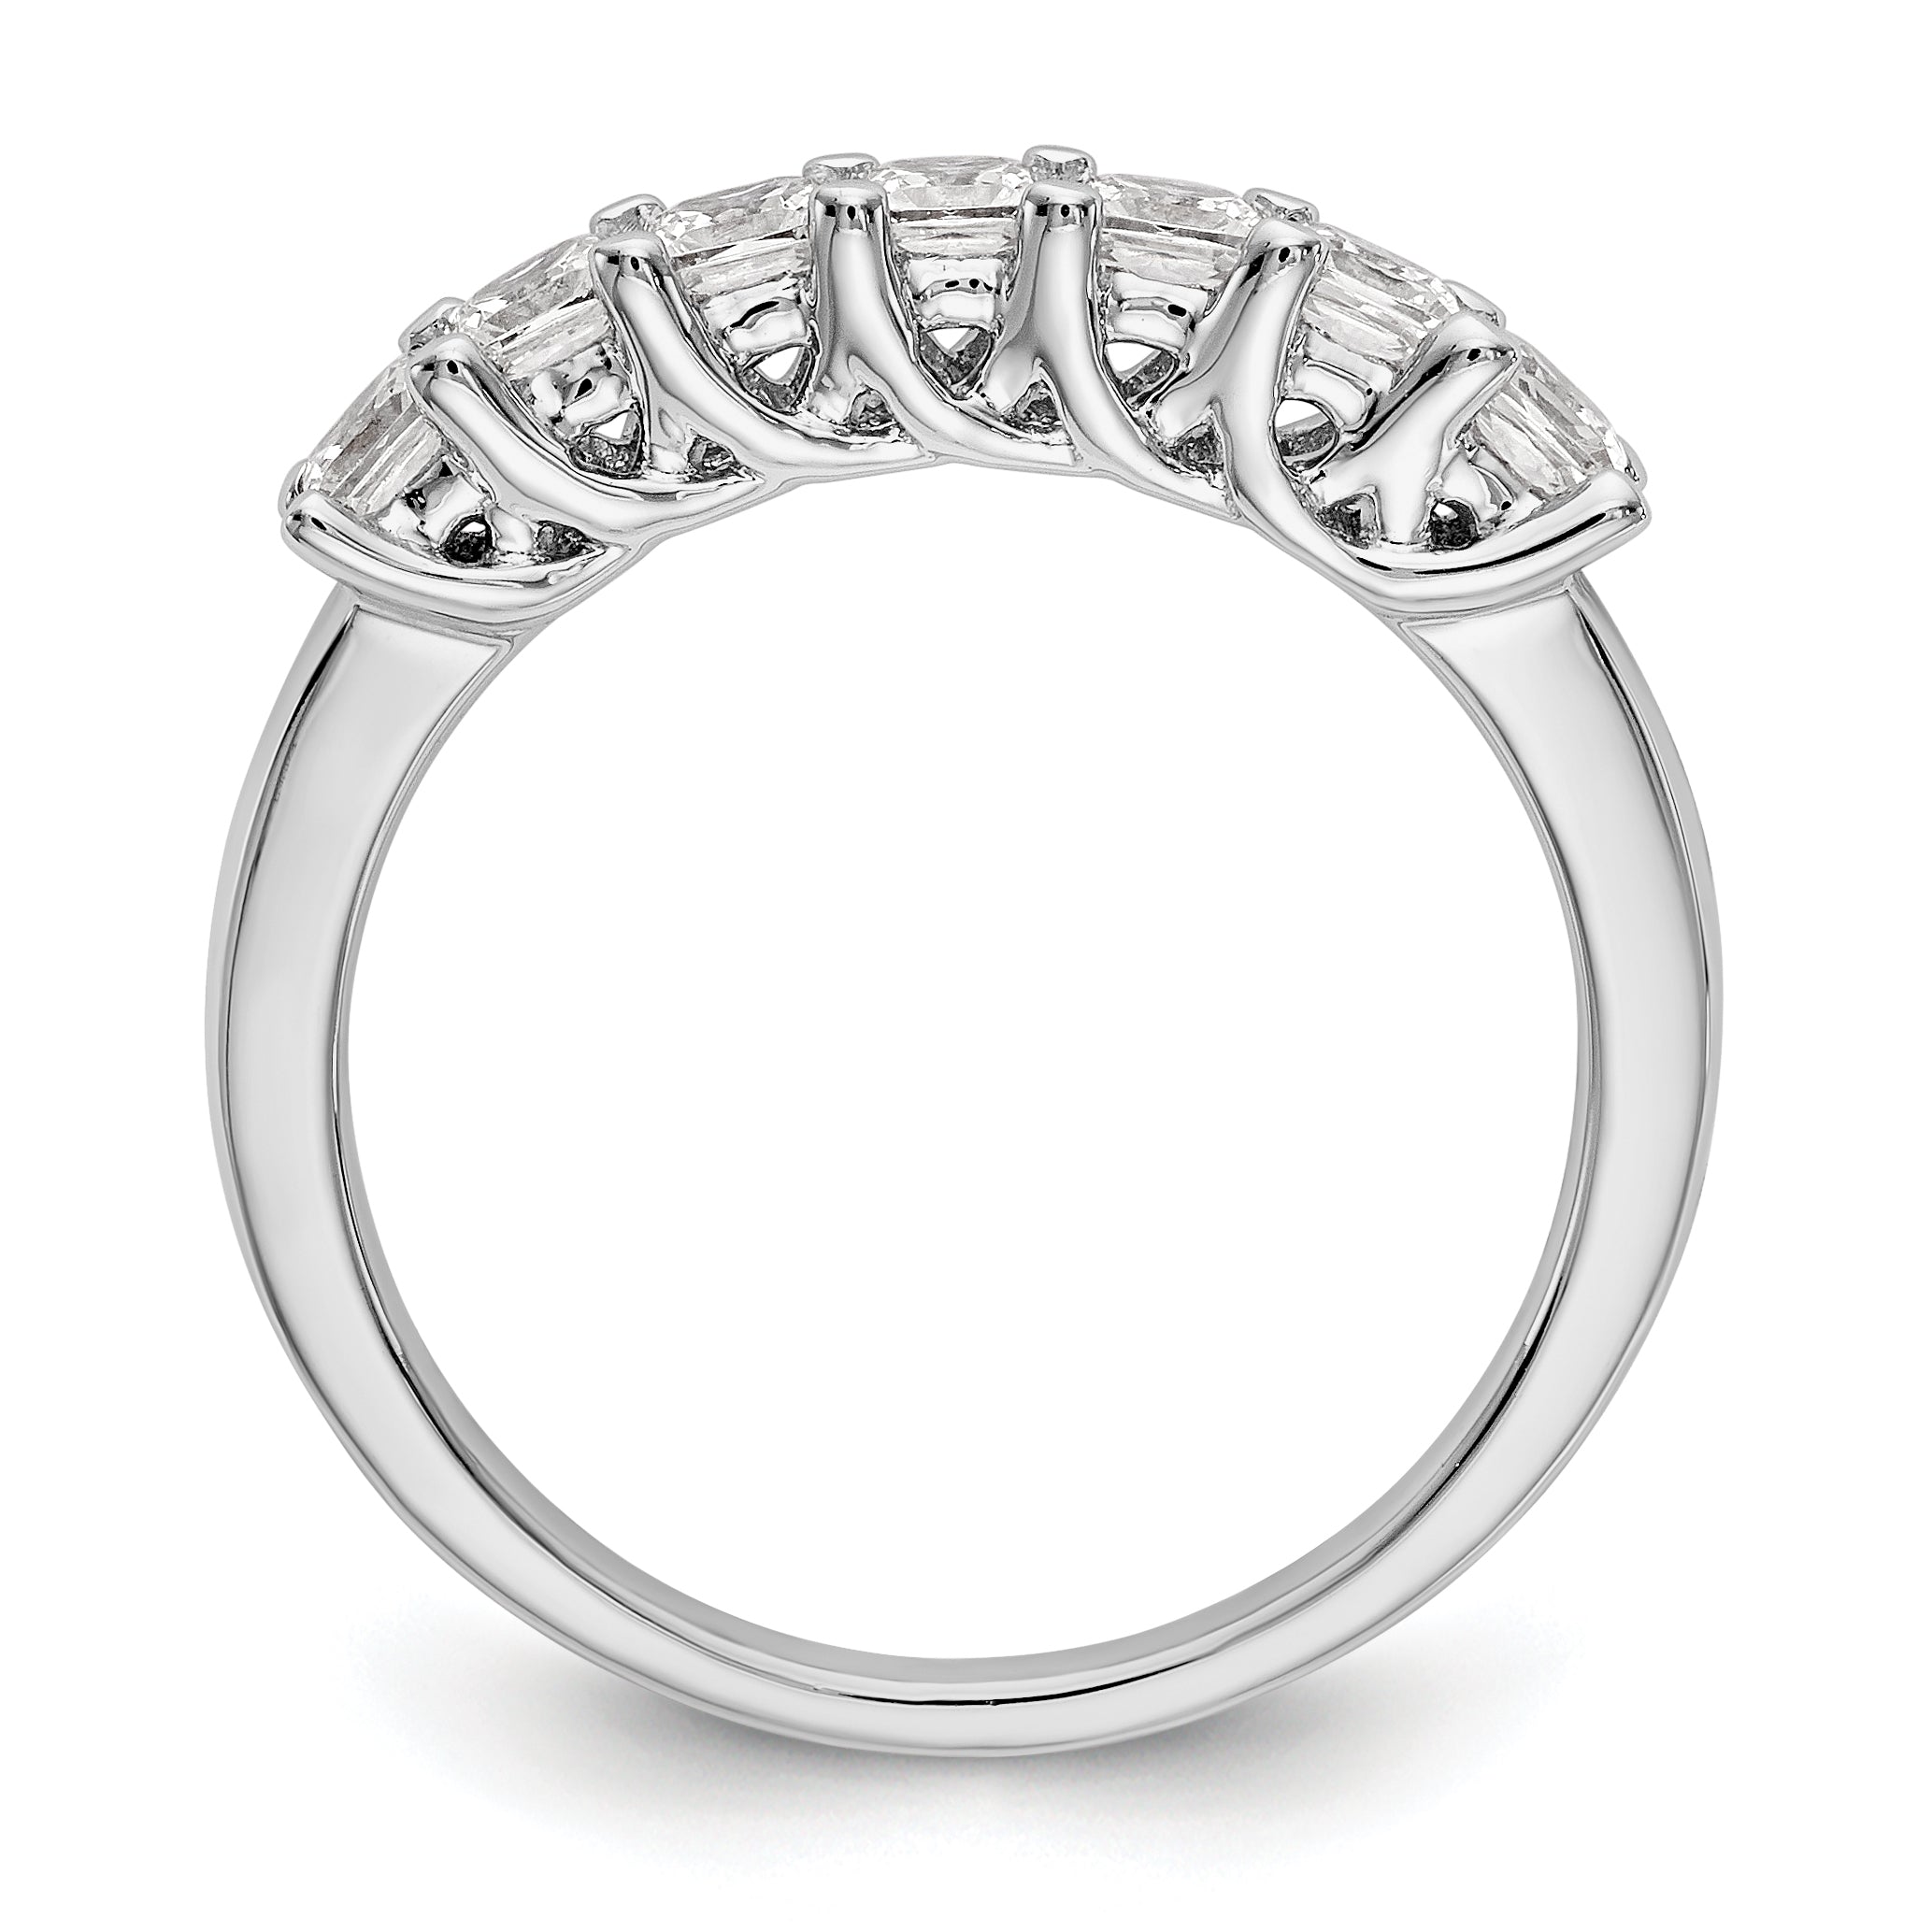 14K White Gold 7-Stone Shared Prong 1 carat Complete Princess Diamond Band